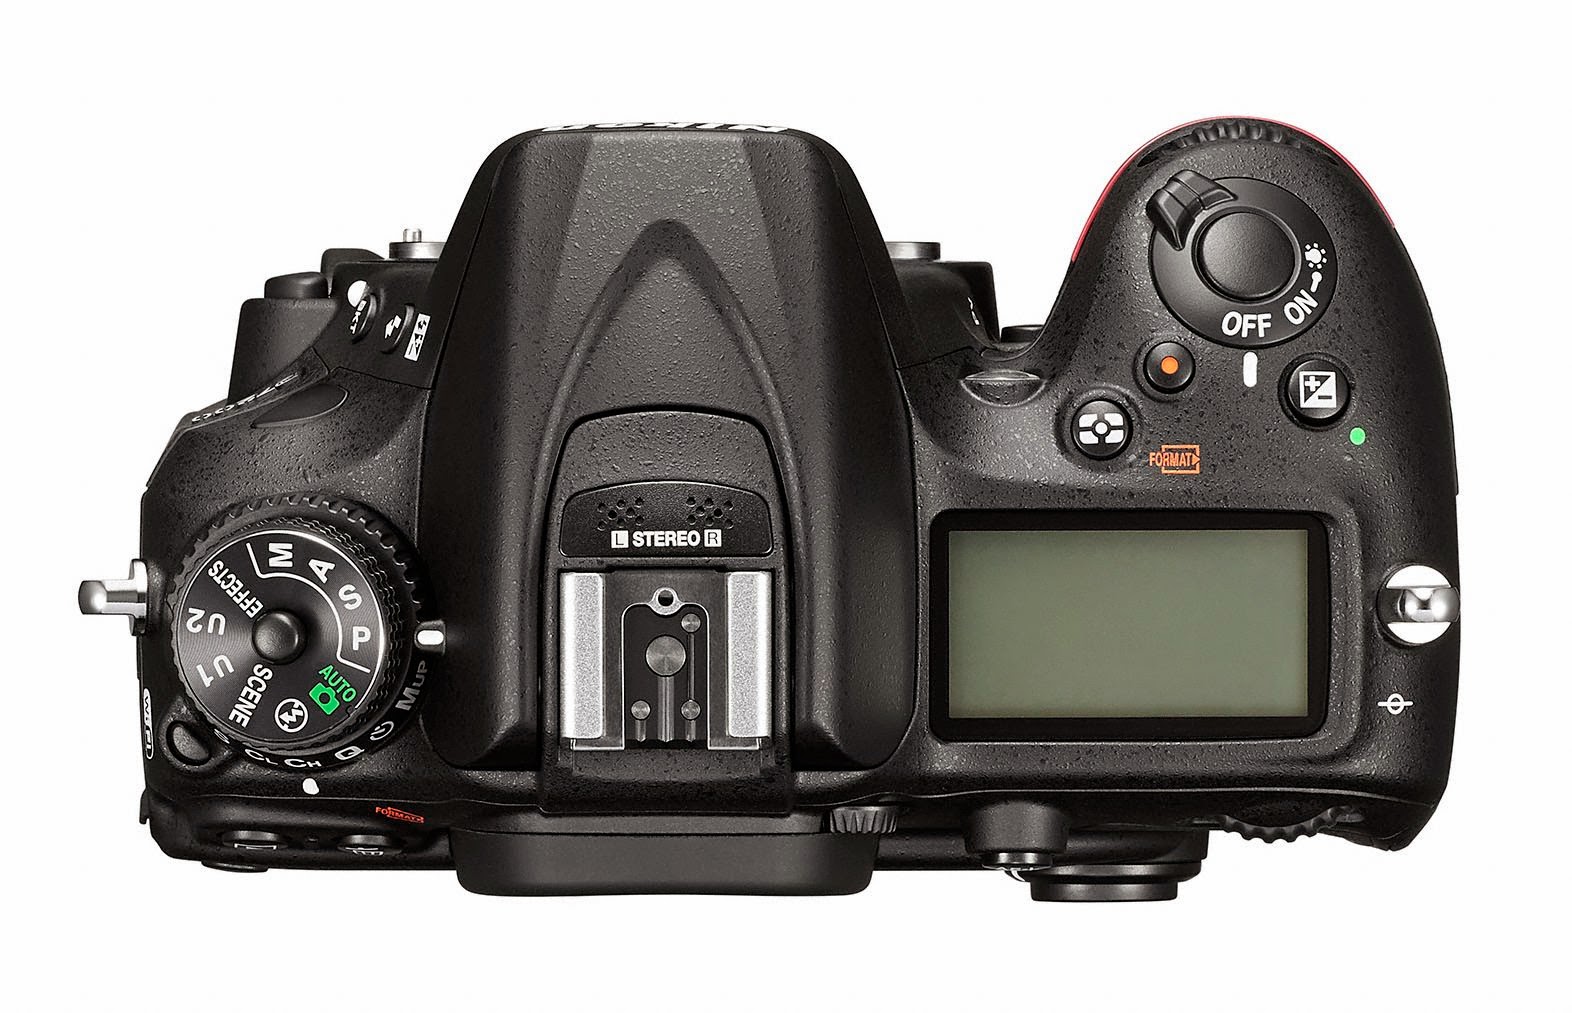 New Nikon D7200 announced! - Park Cameras Blog